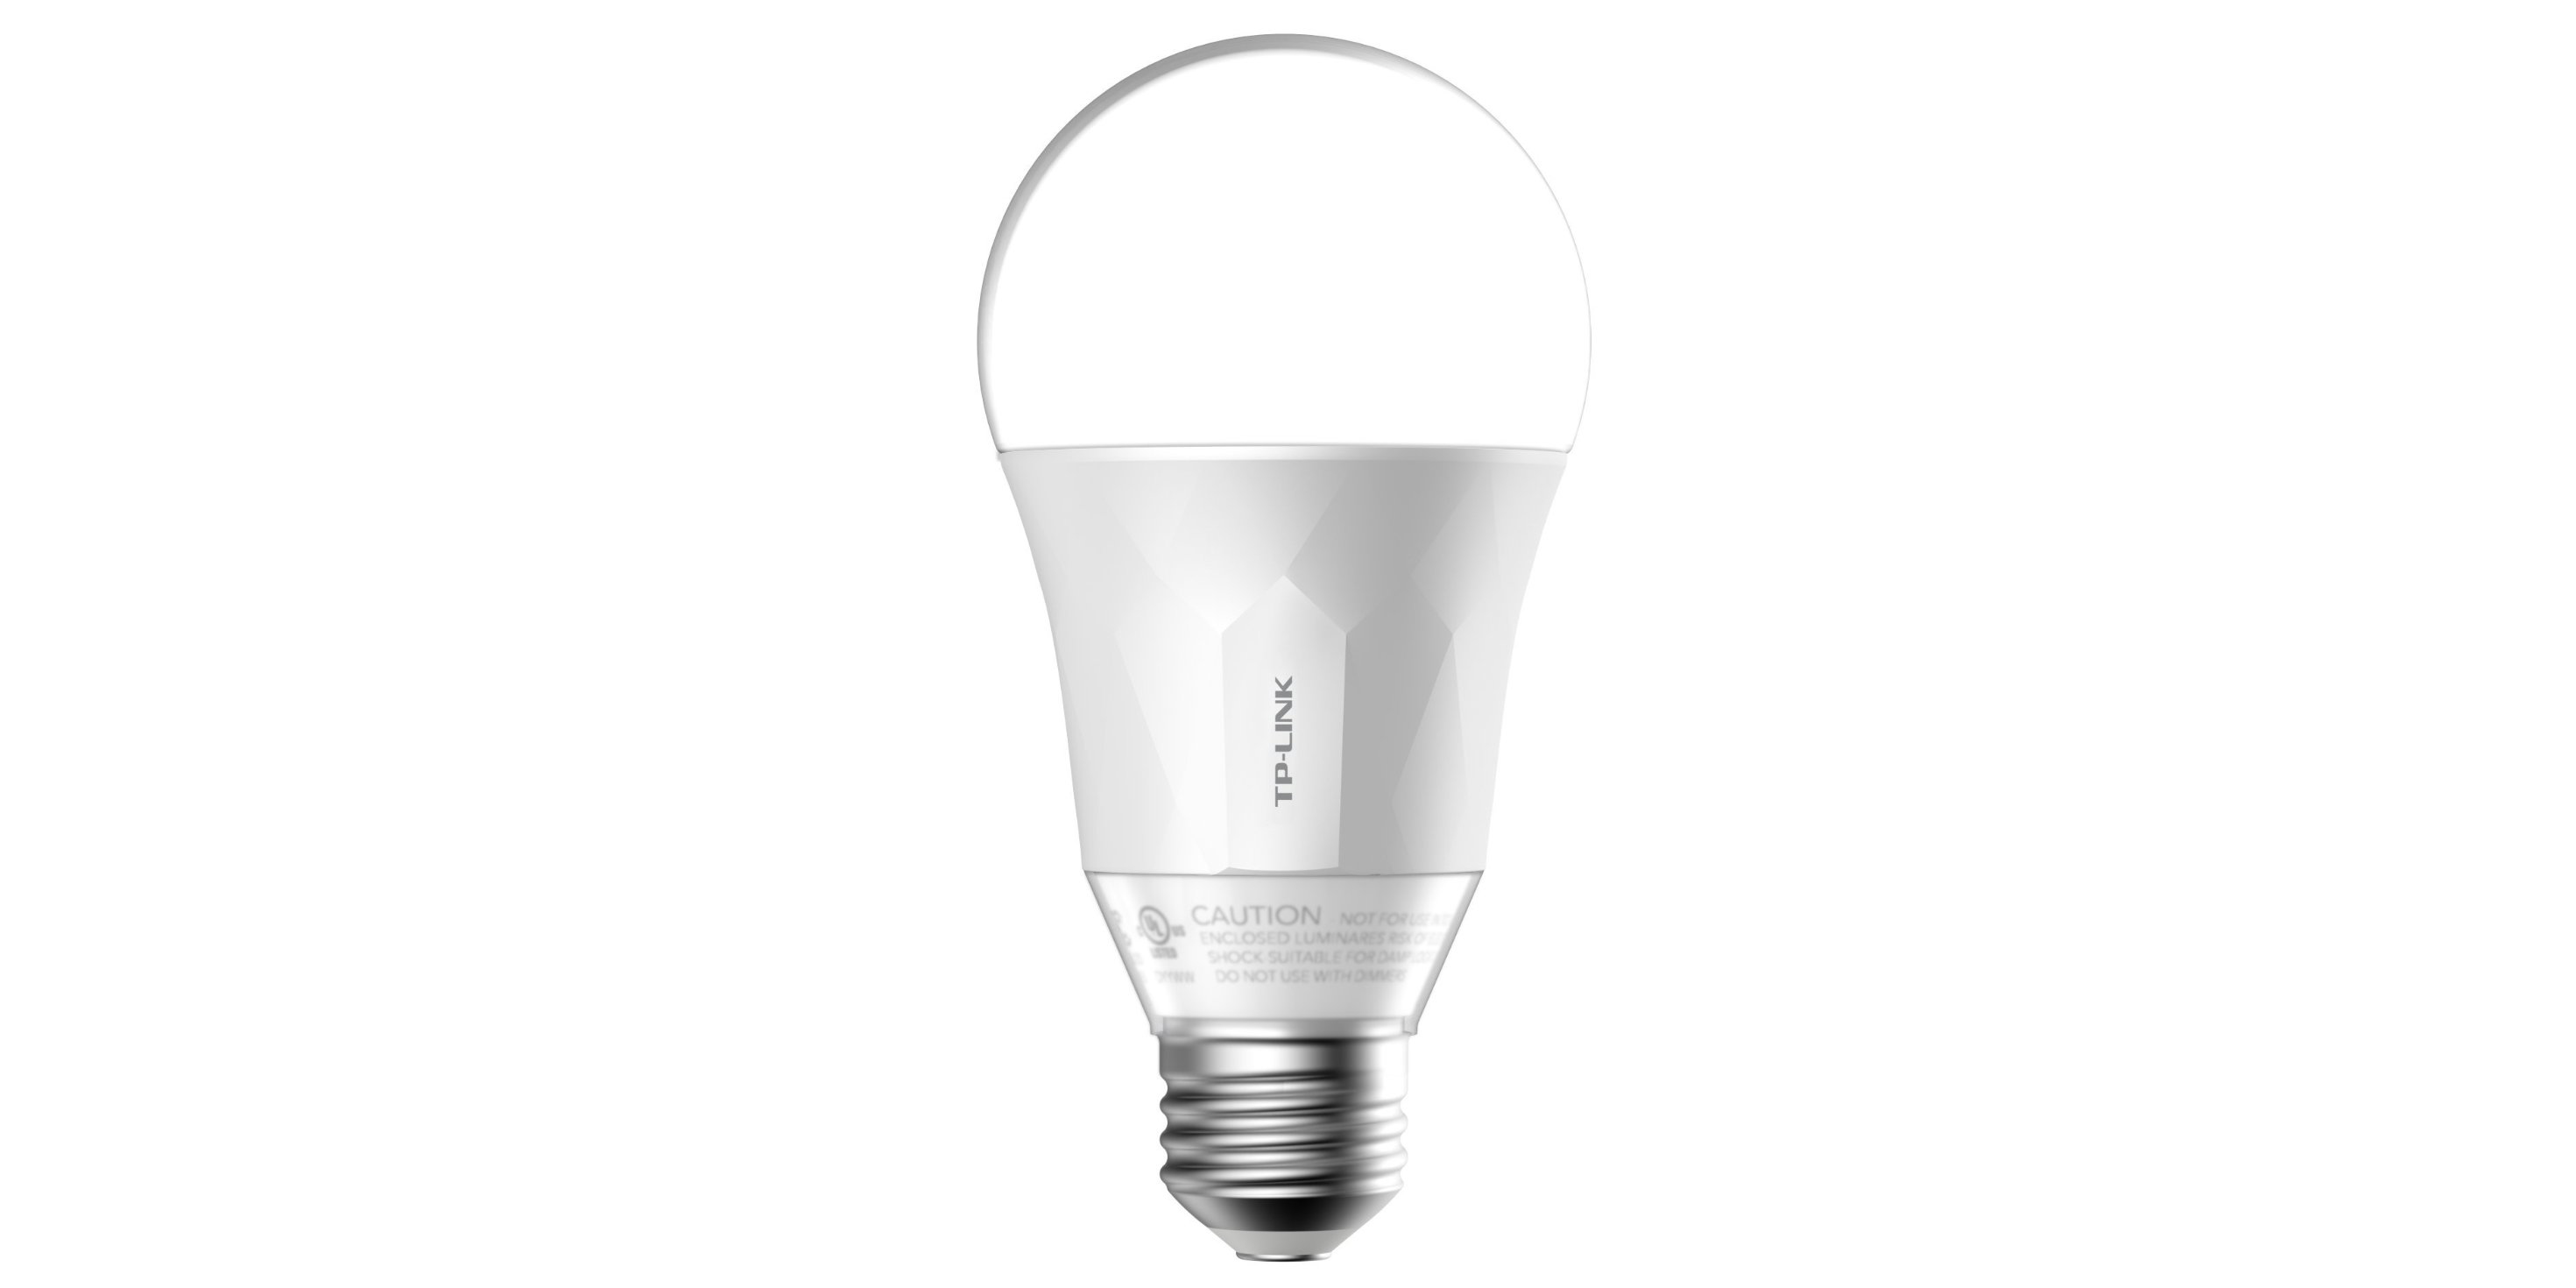 The best smart LED light bulbs with HomeKit, Wi-Fi and Bluetooth